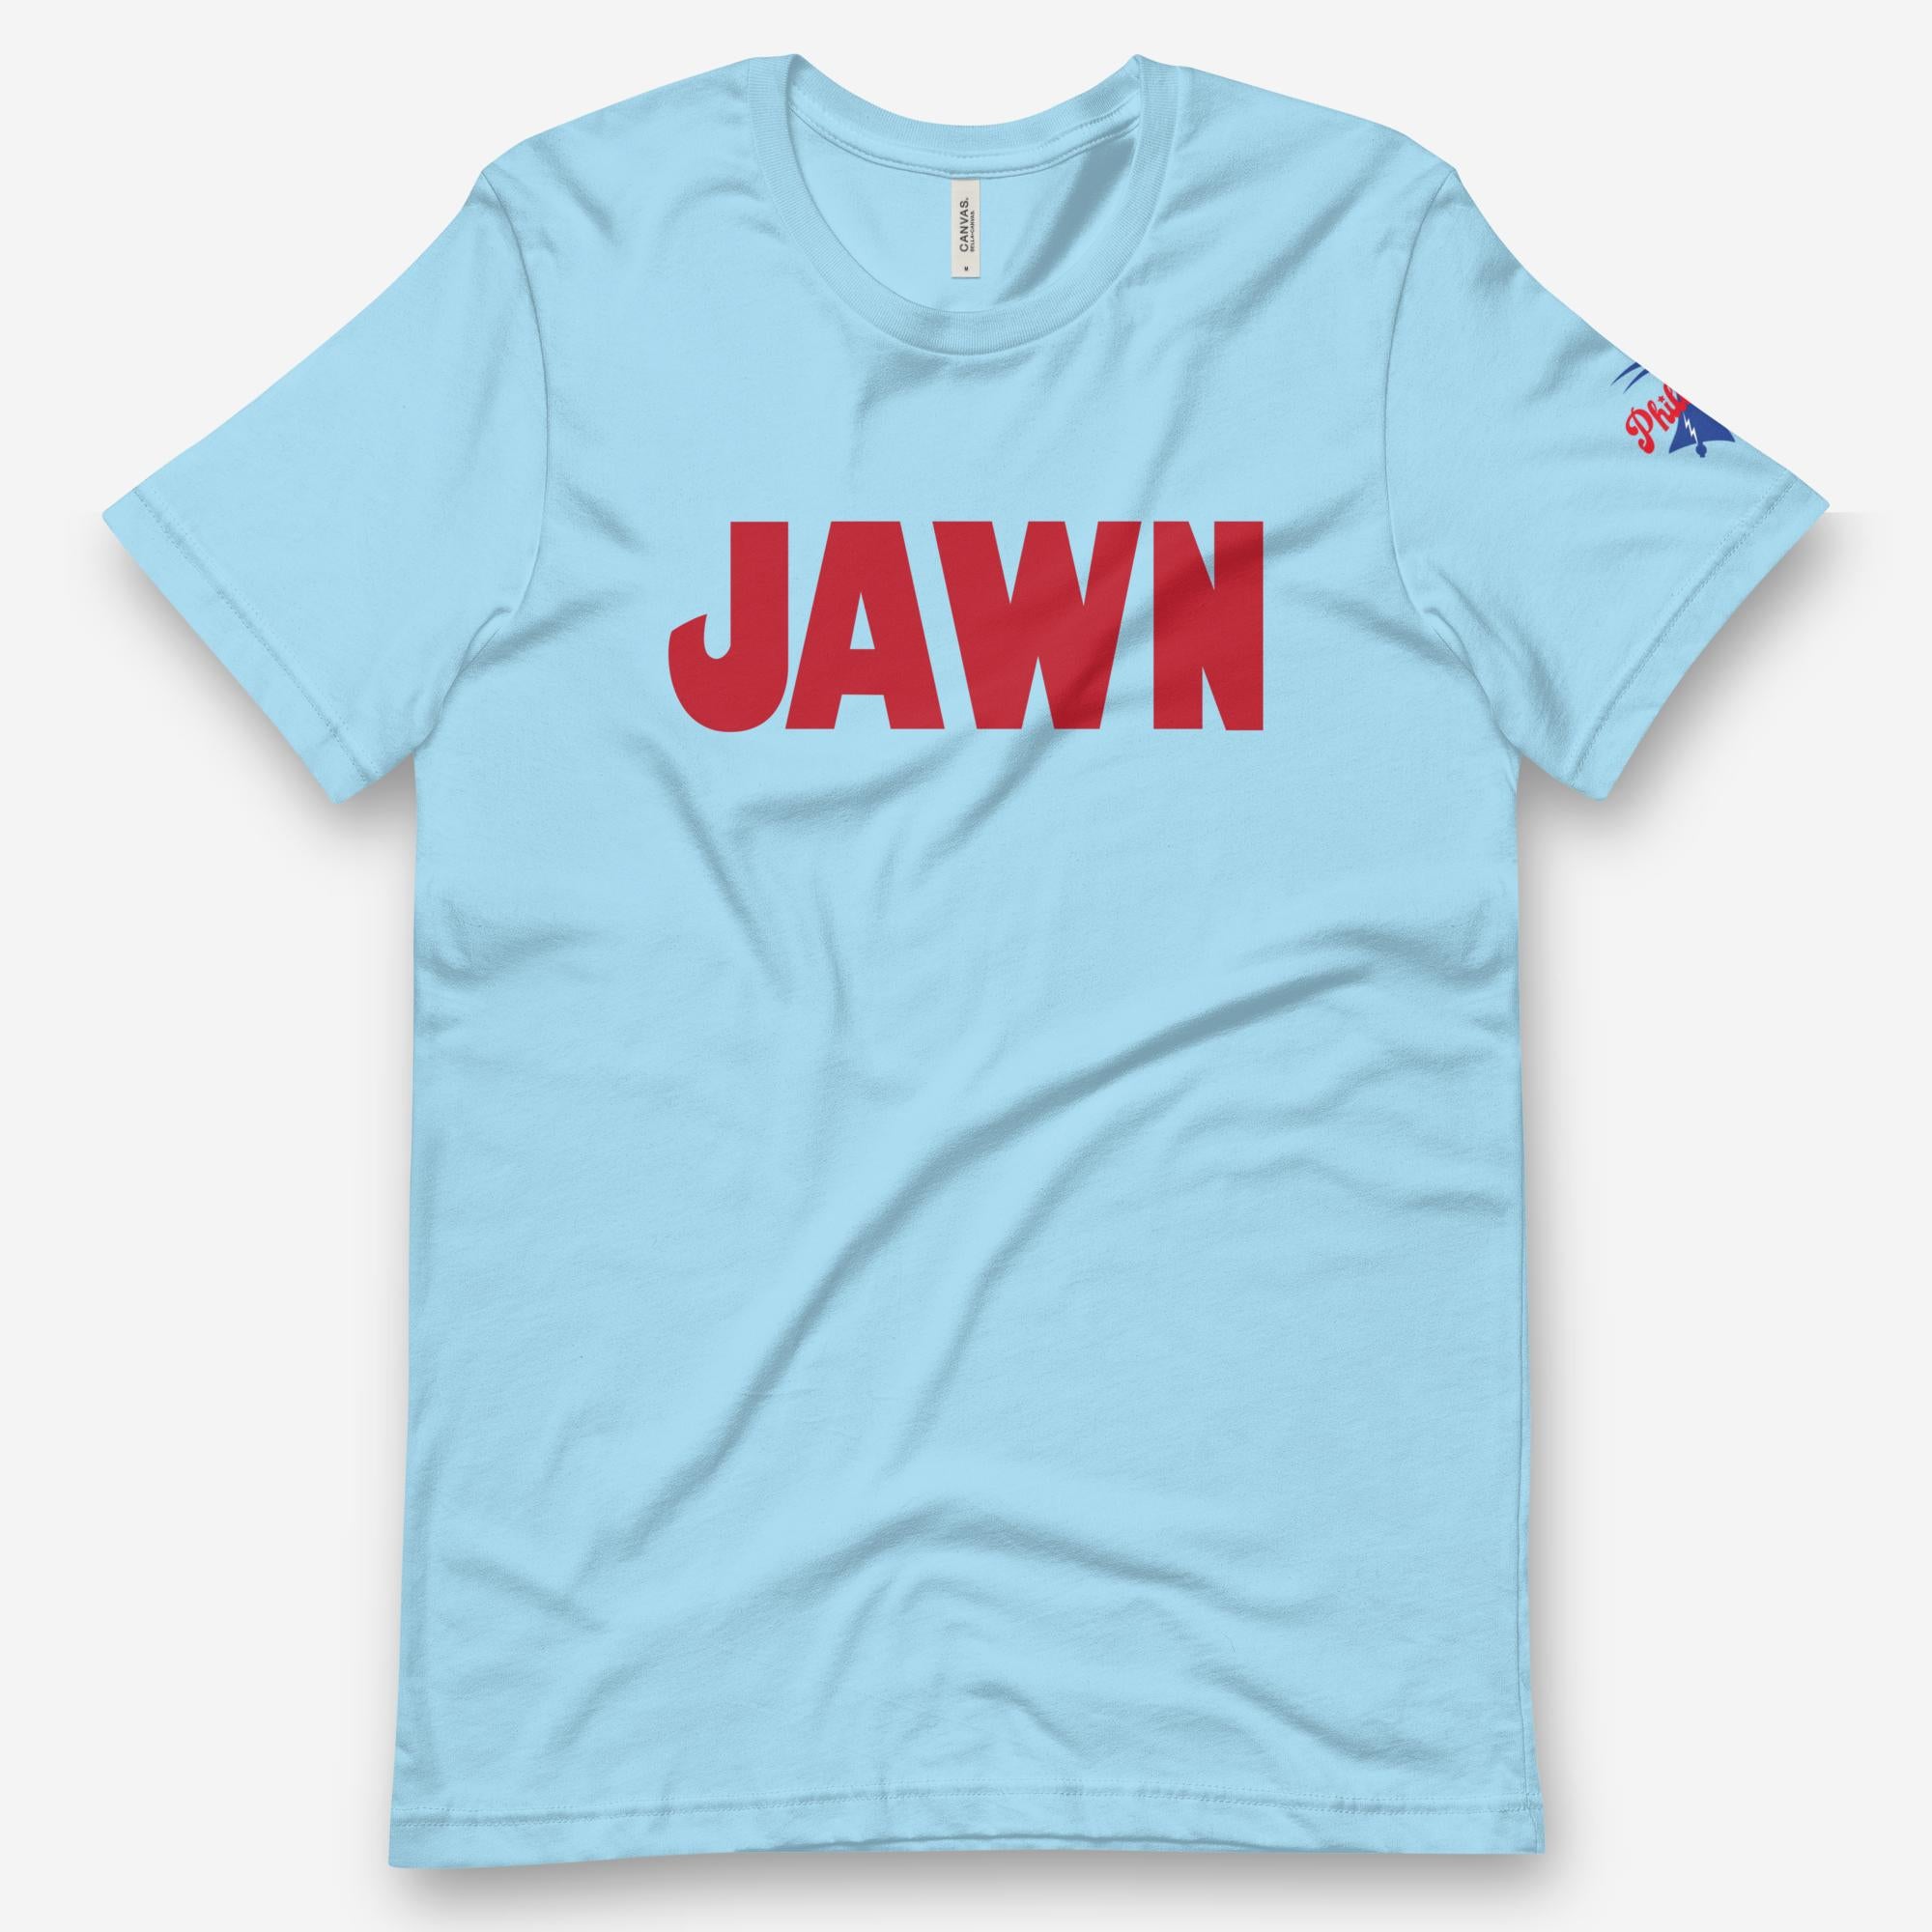 "Jaws Jawn" Tee